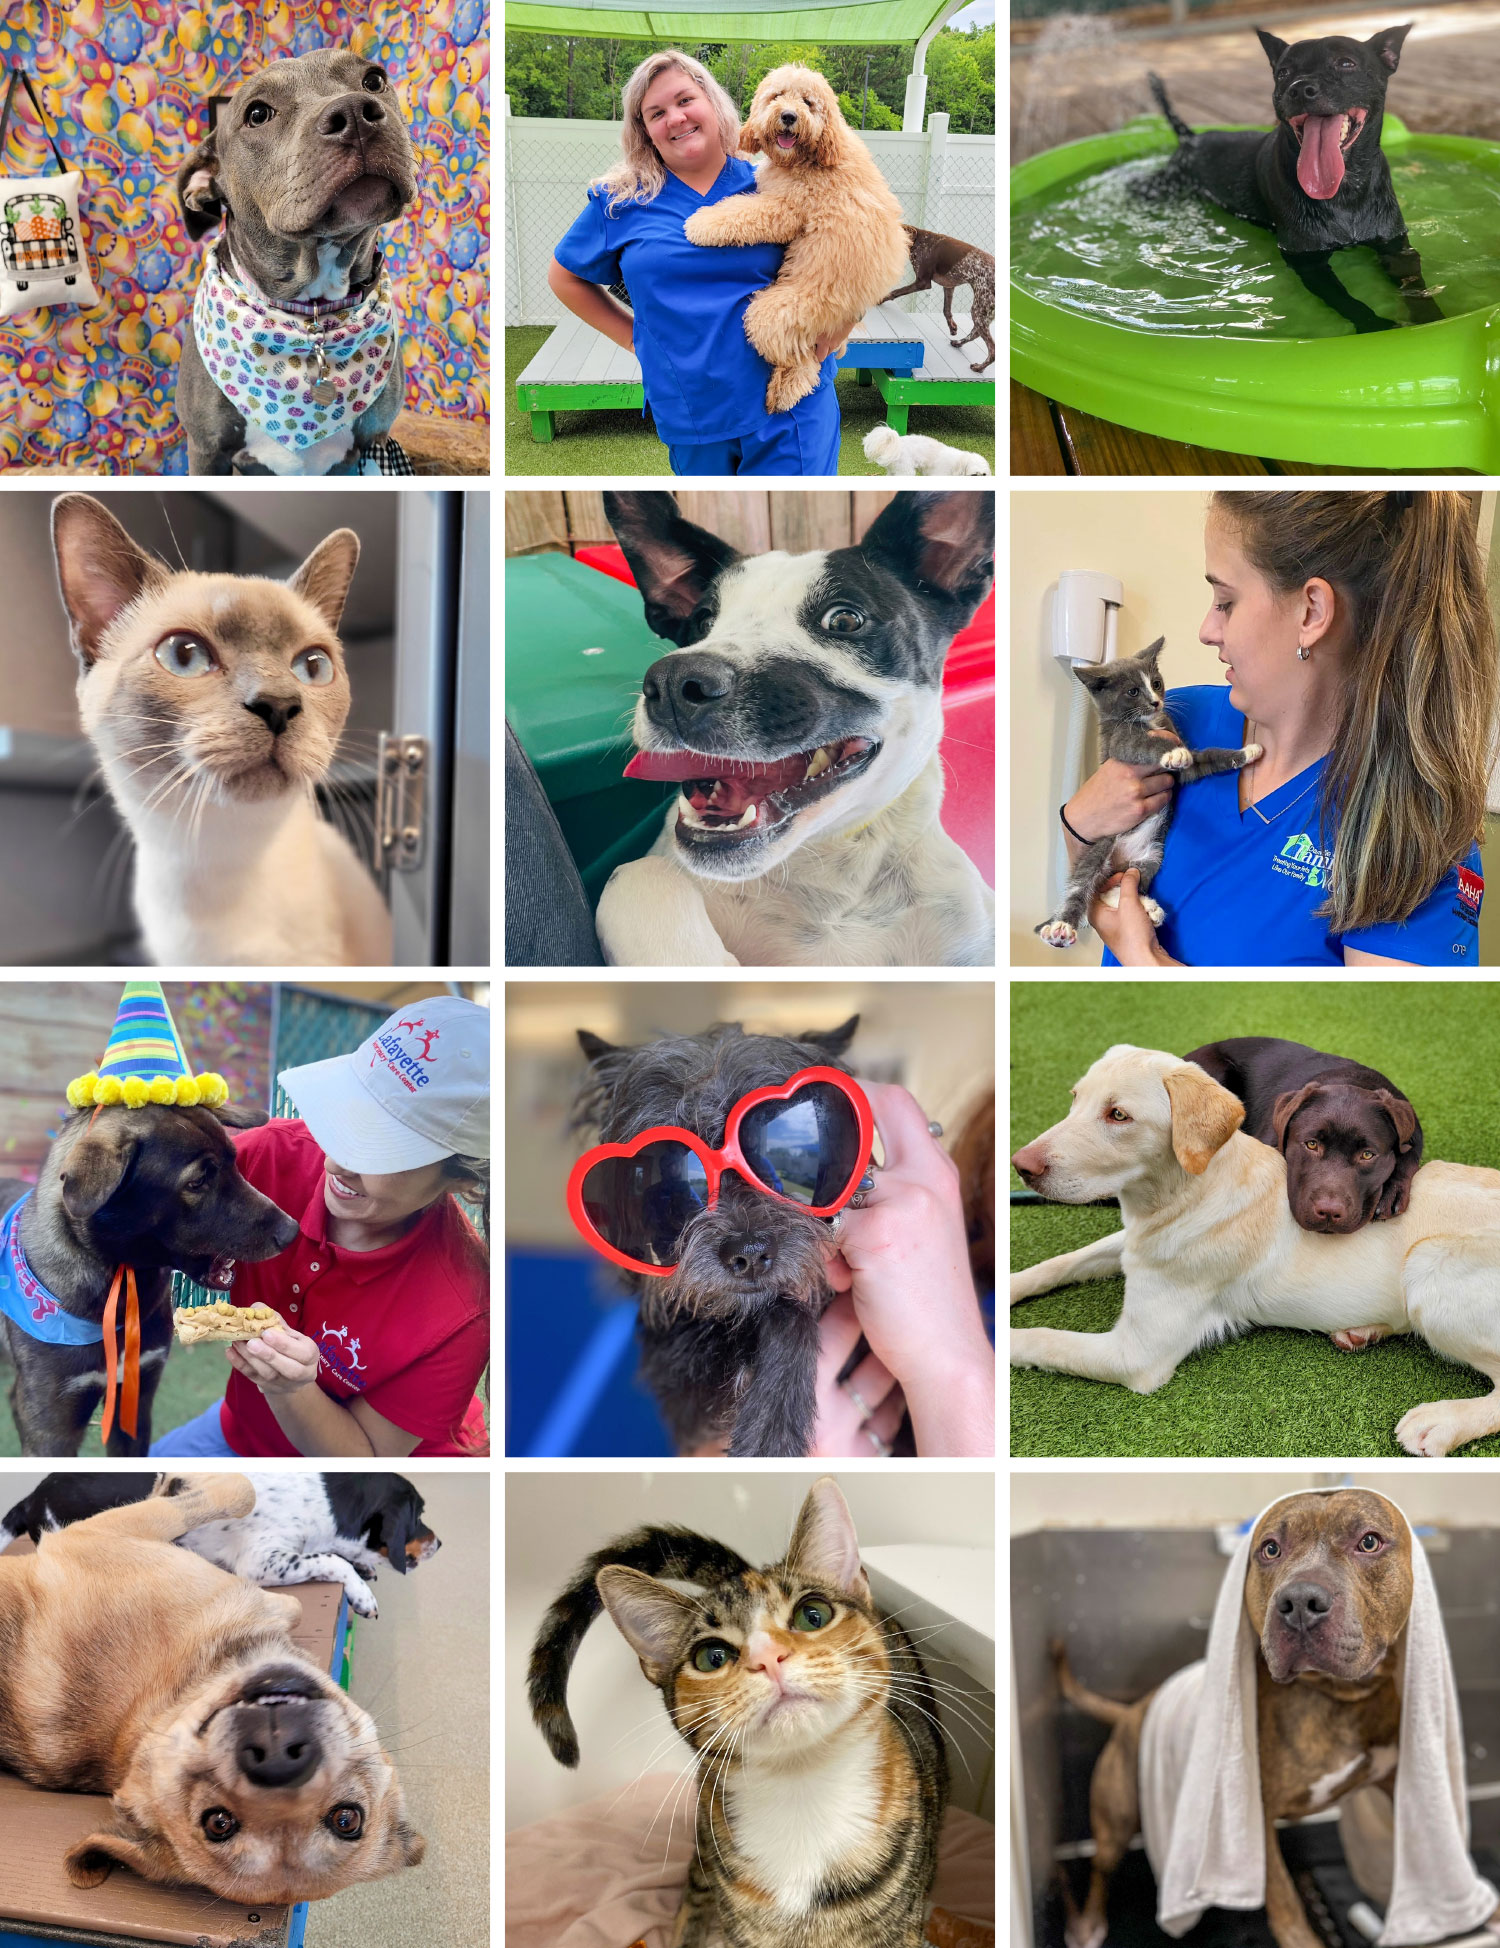 Fun images of pets at various veterinary boarding facilities.